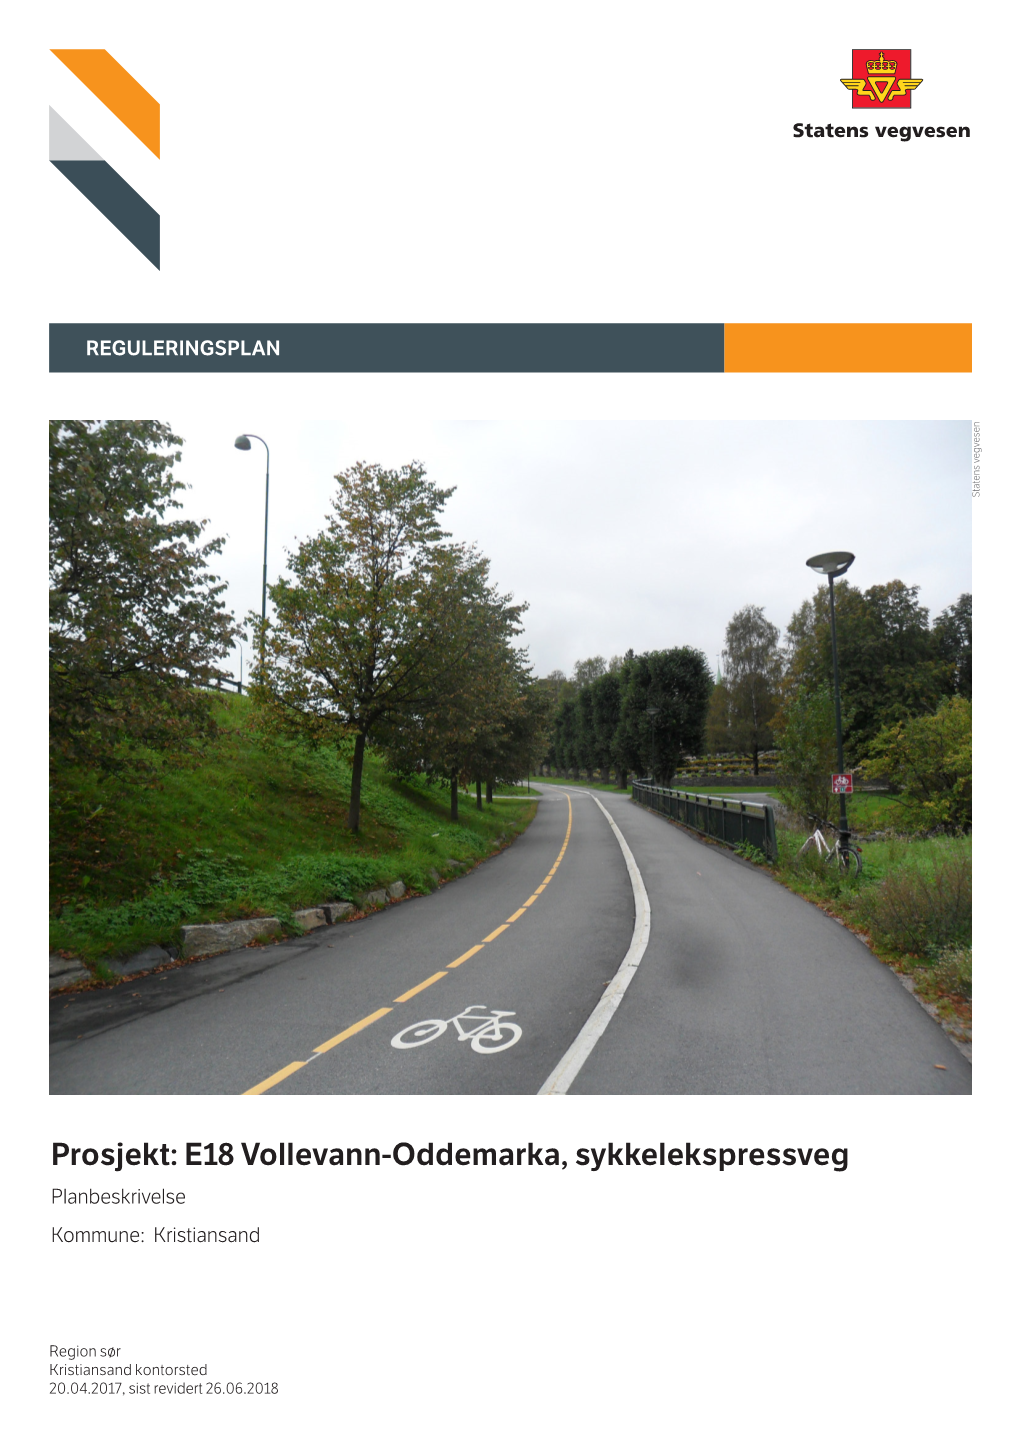 Prosjekt: E18 Vollevann-Oddemarka, Sykkelekspressveg